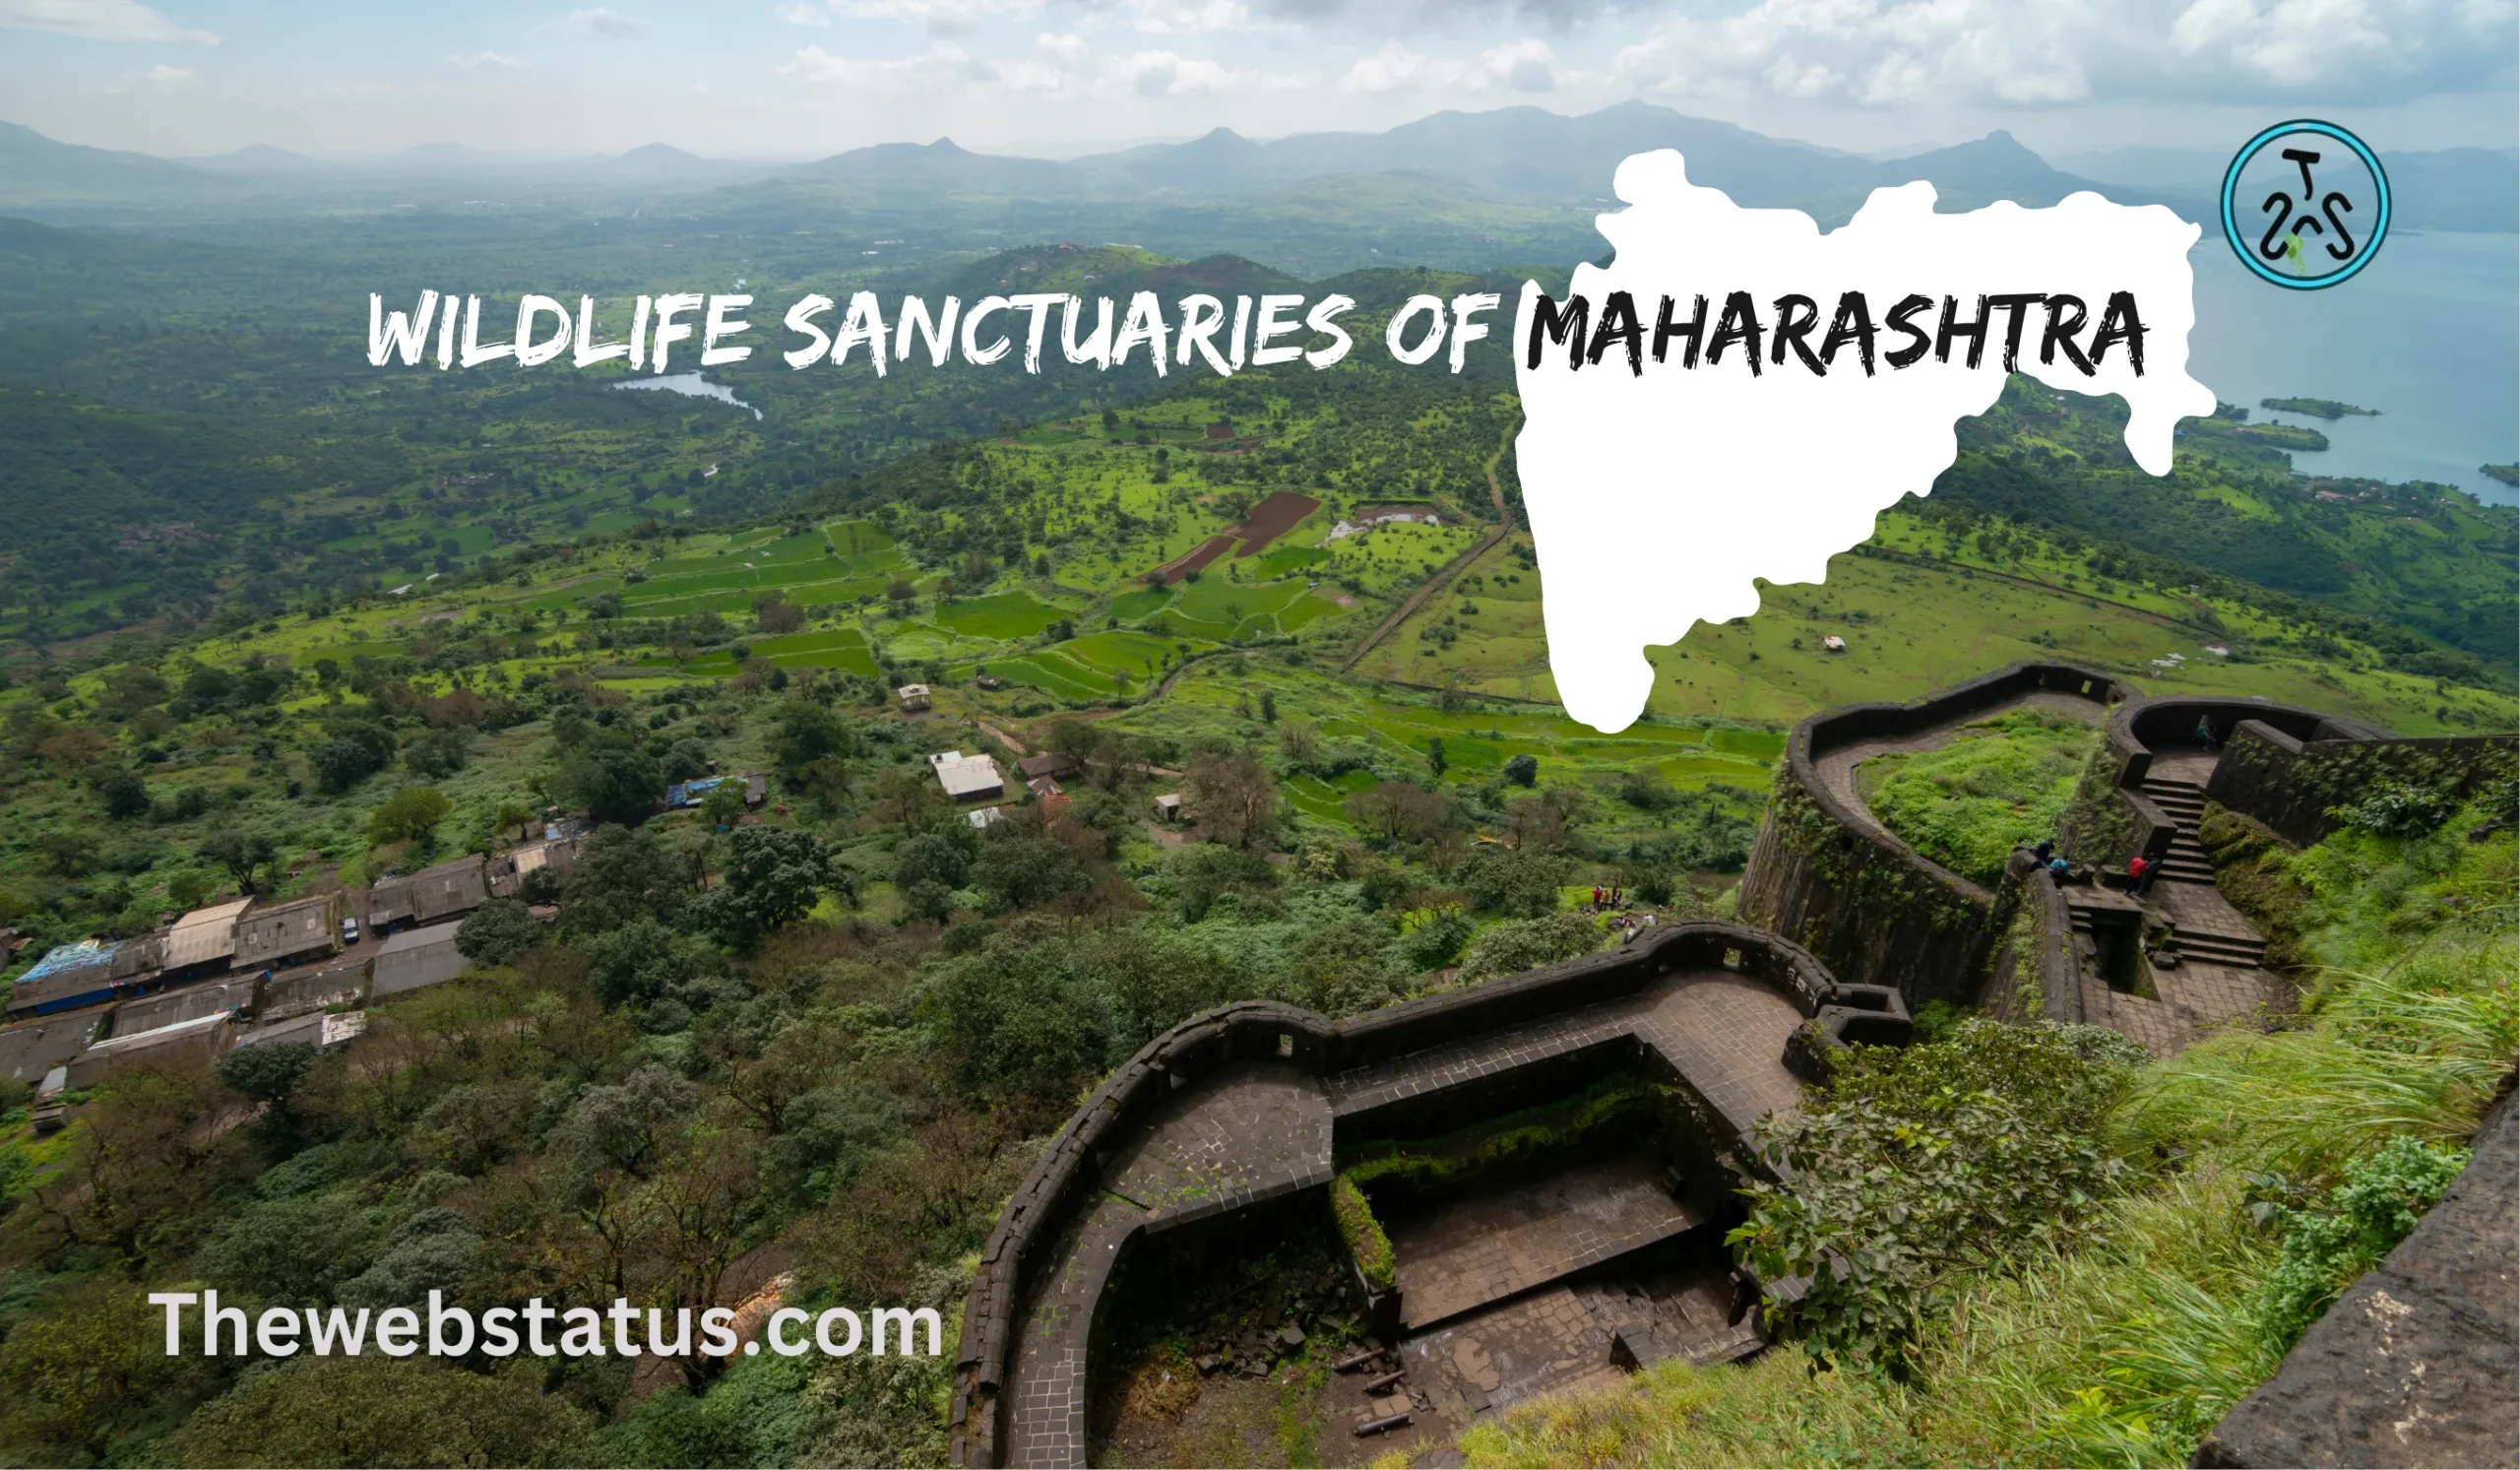 List of Wildlife Sanctuaries of Maharashtra